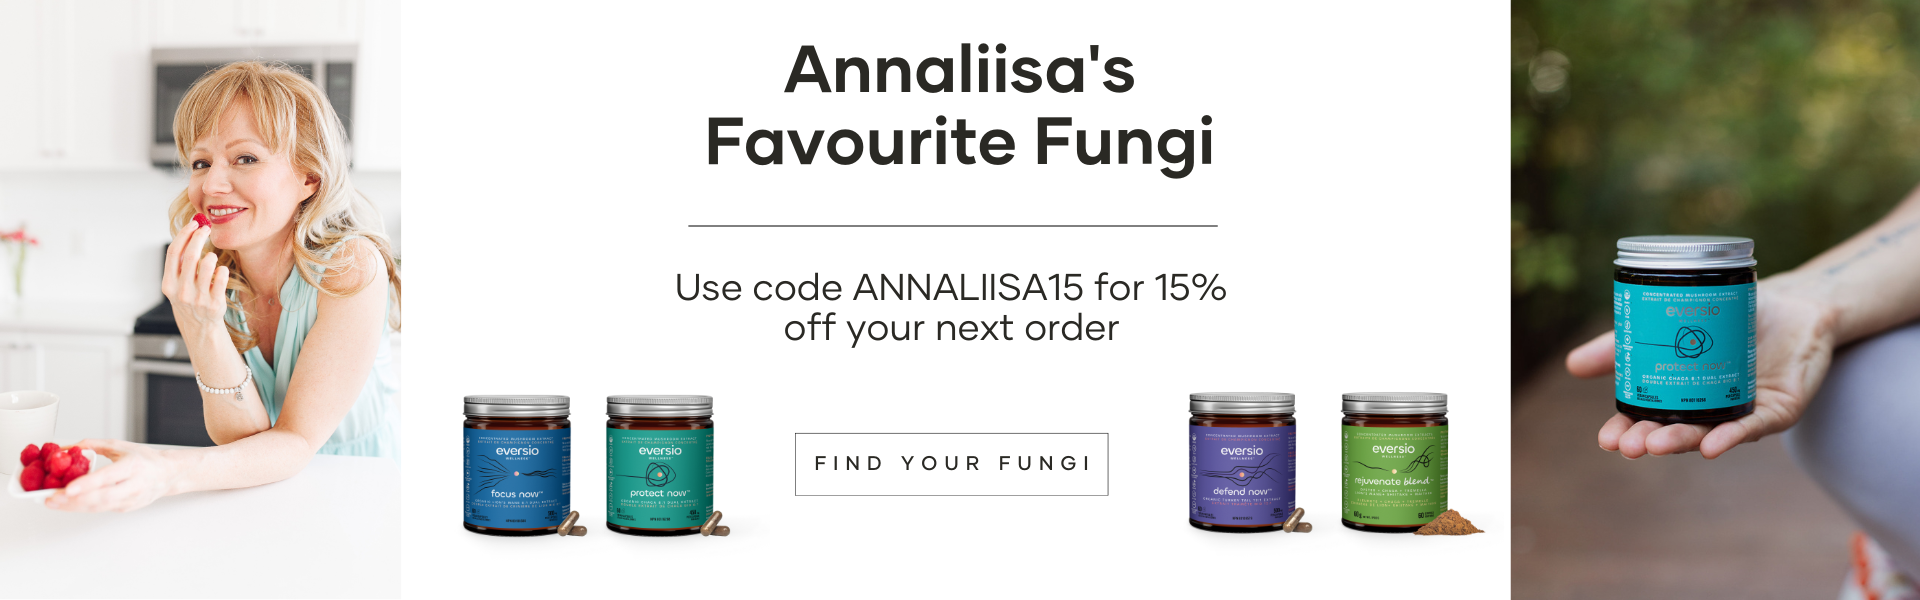 Annaliisa's favourite medicinal mushrooms by Eversio Wellness